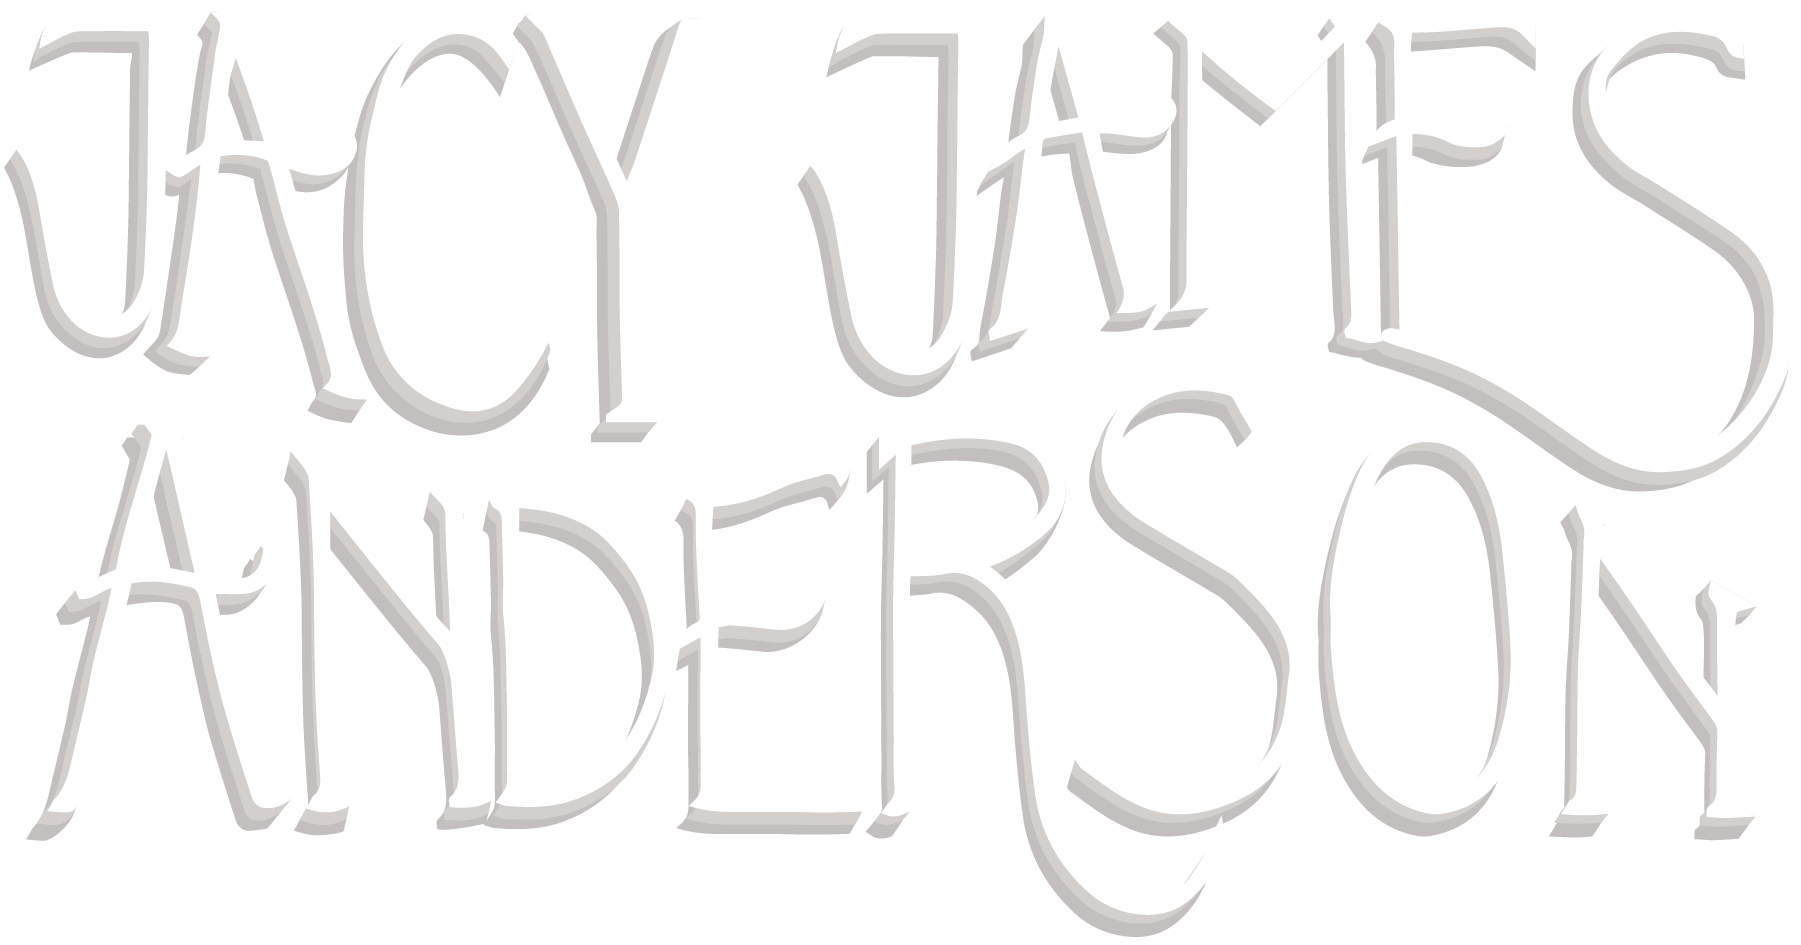 Jacy James Anderson